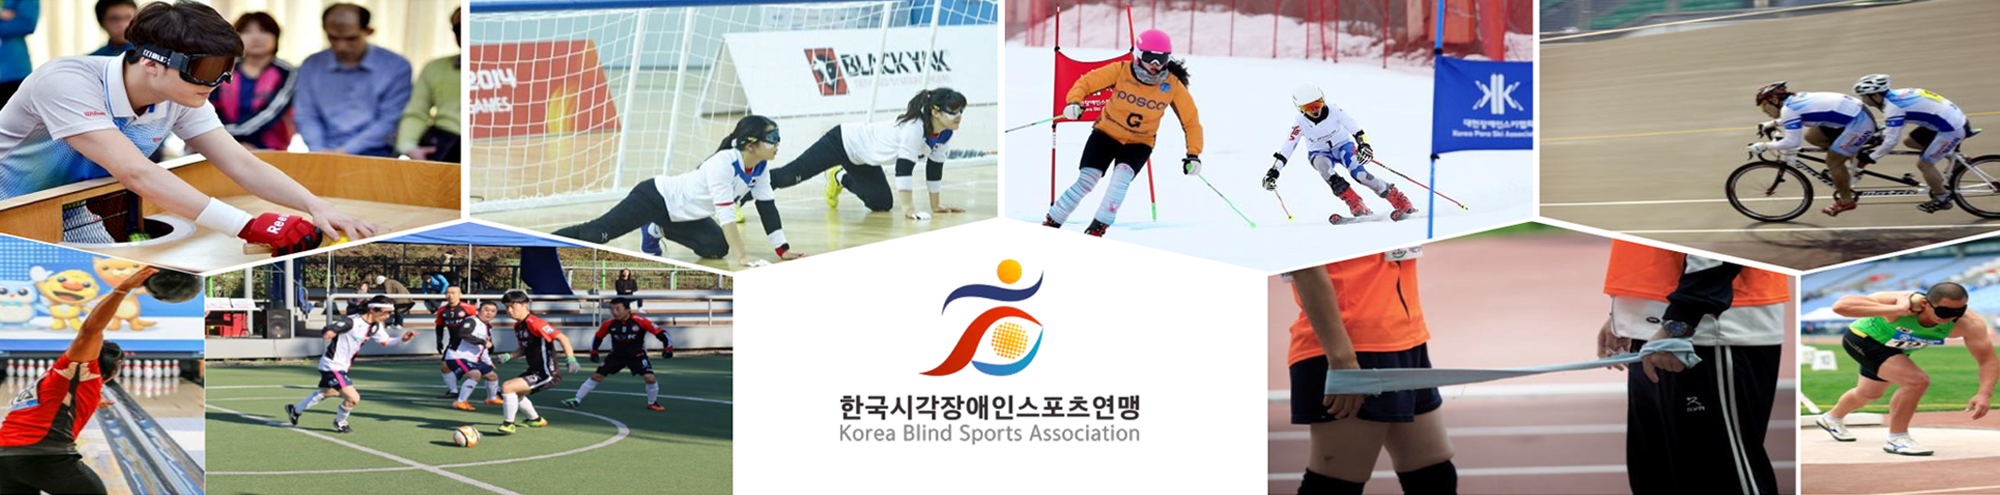 Korea Blind Sports Association